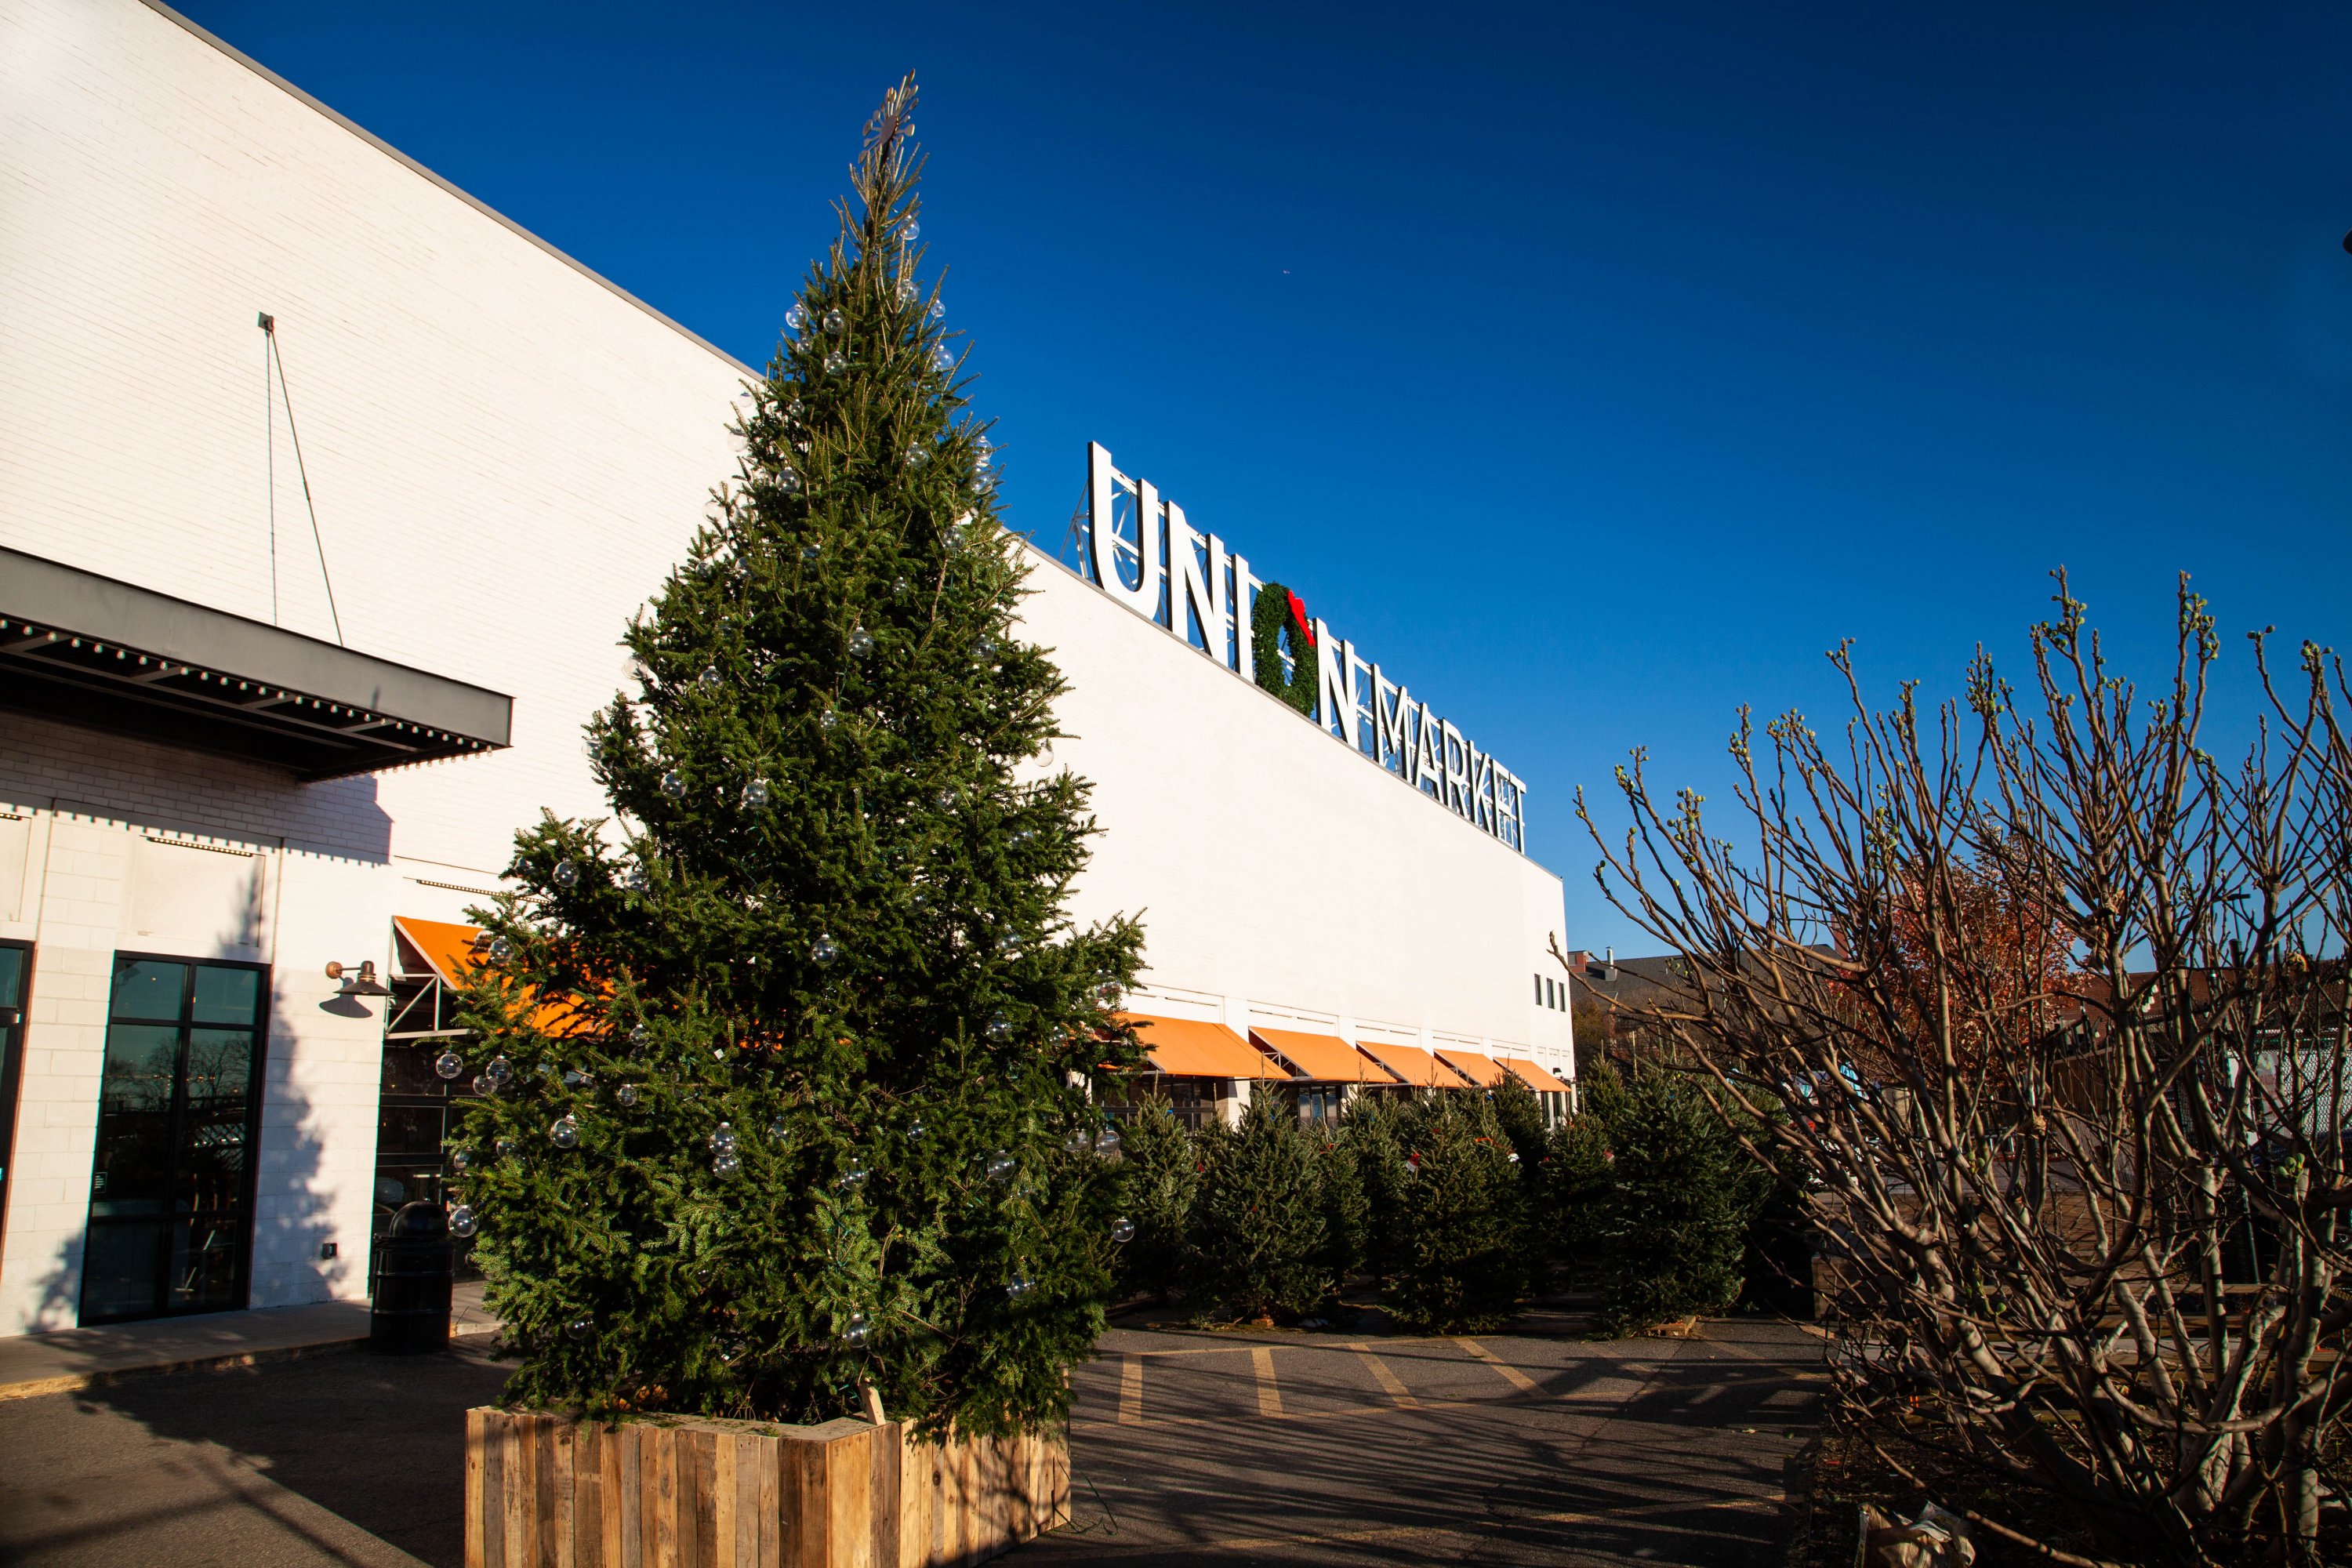 Shop for Christmas trees and seasonal items at Union Market. Photo courtesy of Union Market.